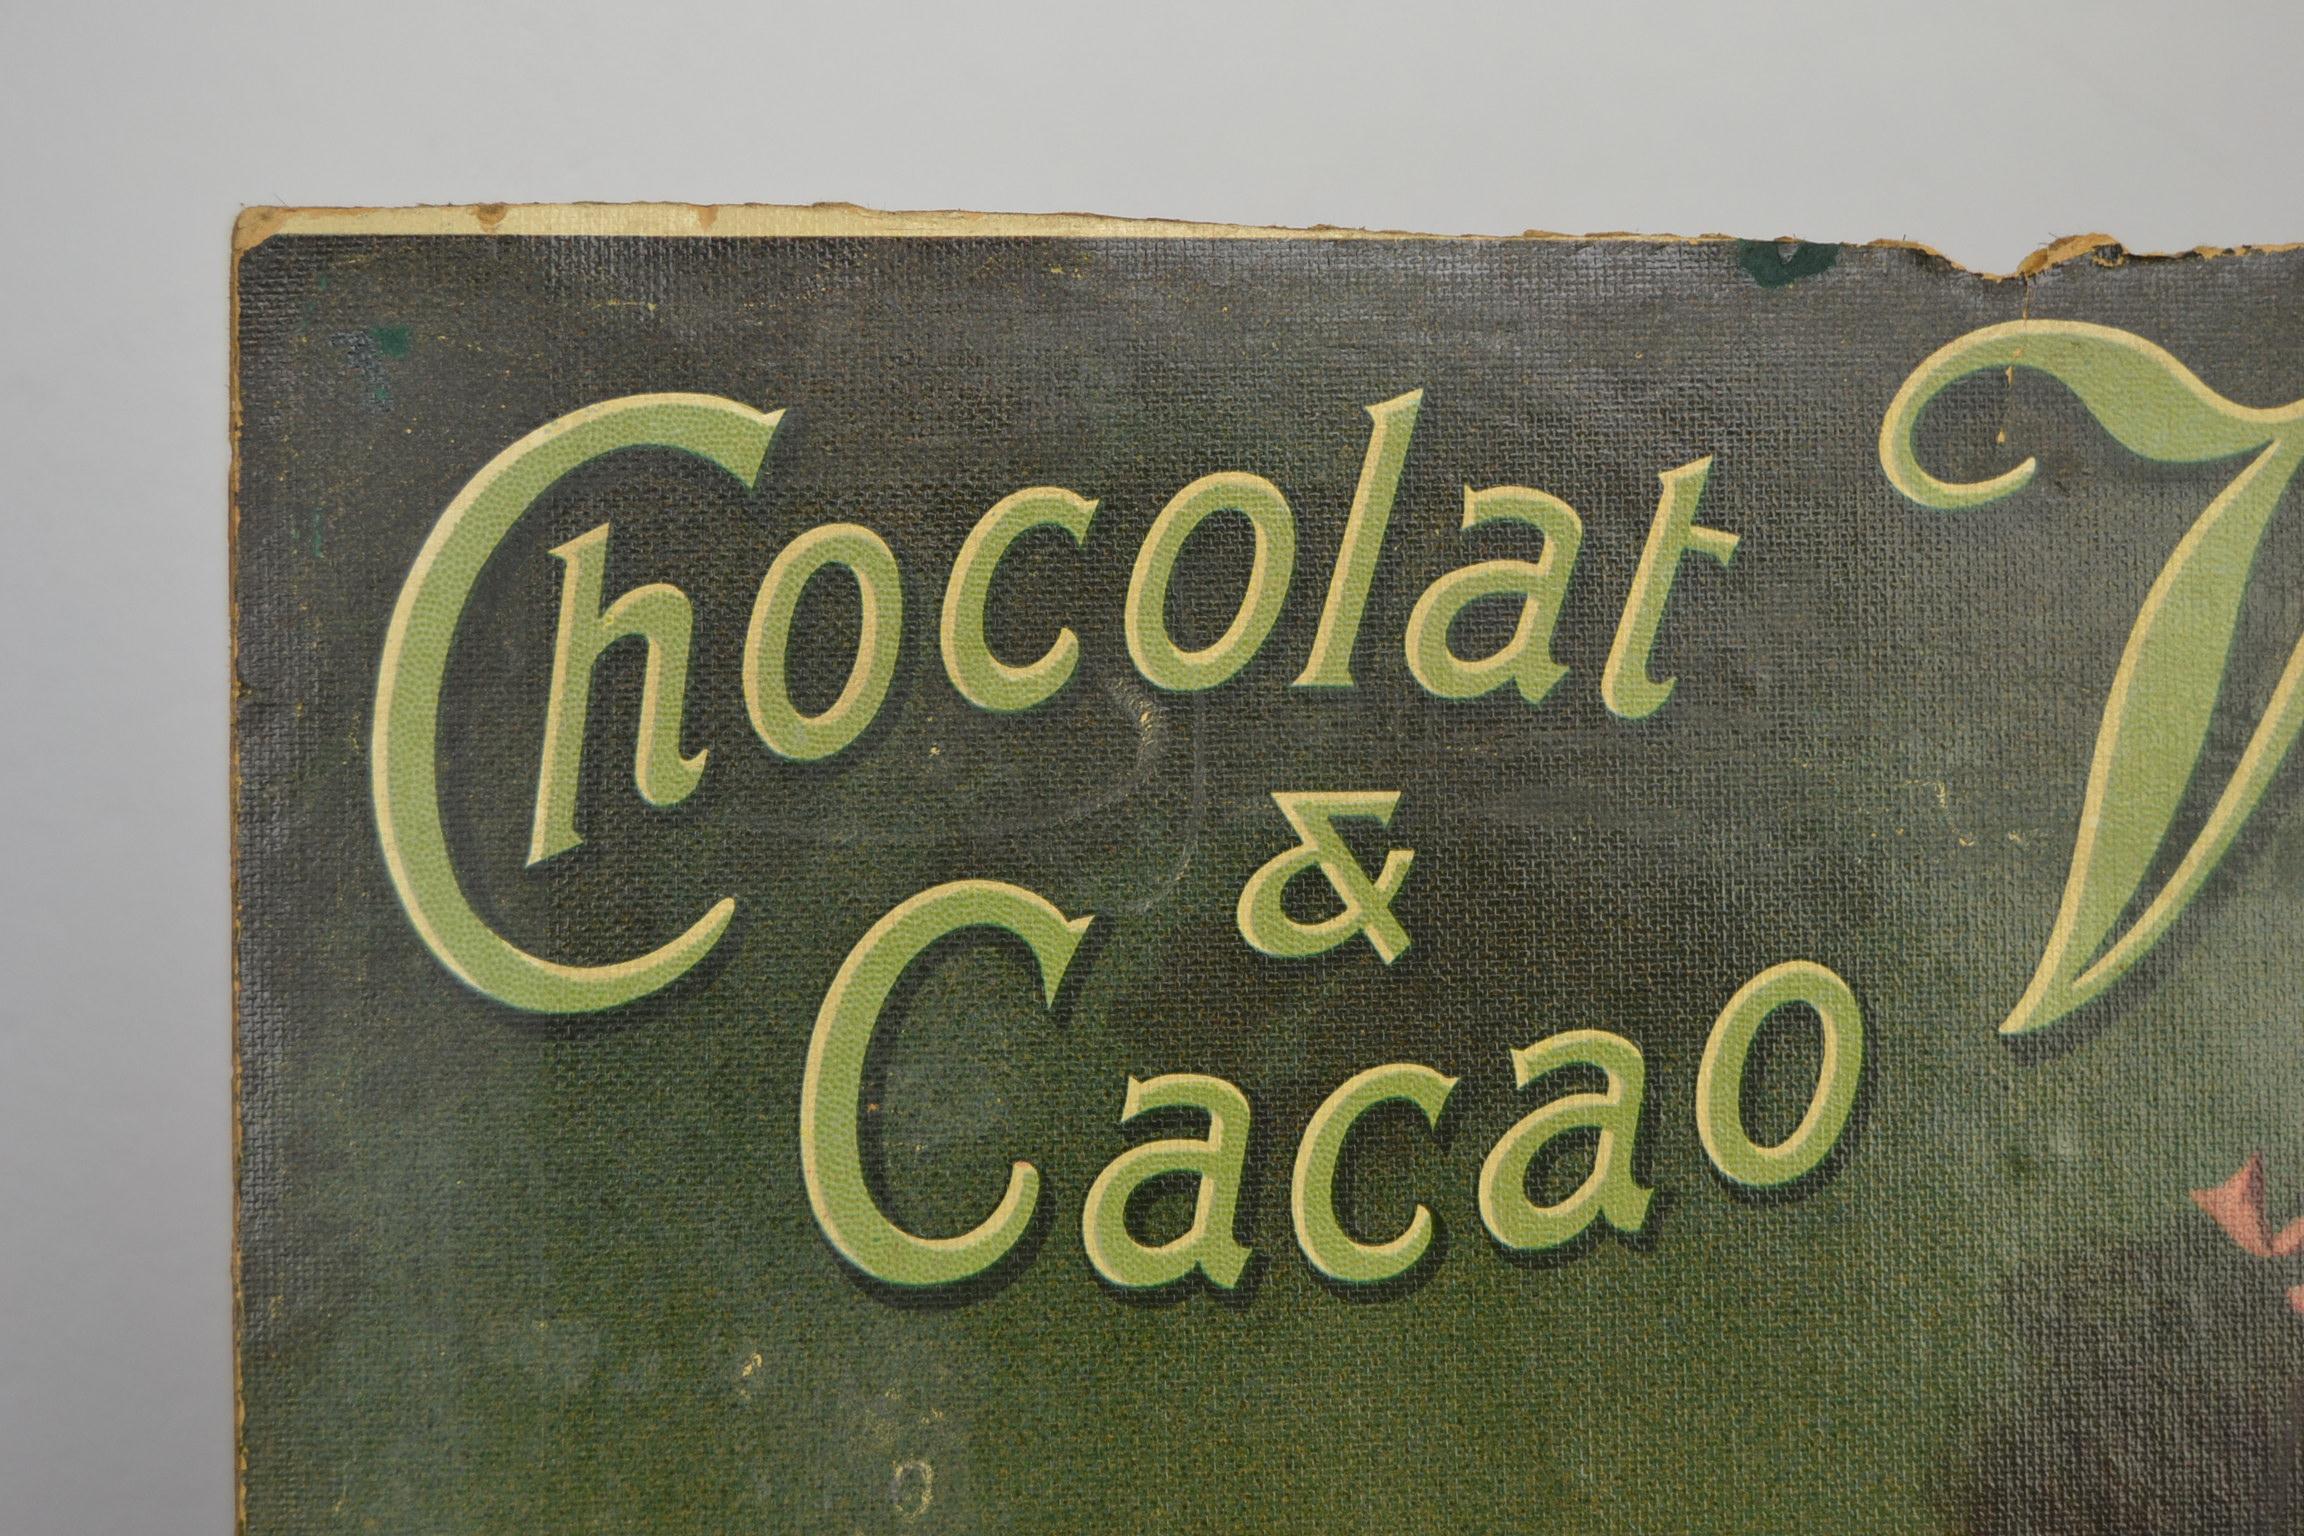 Antique Chromo Advertising Sign for Victoria Chocolate and Cacao, Belgium 3